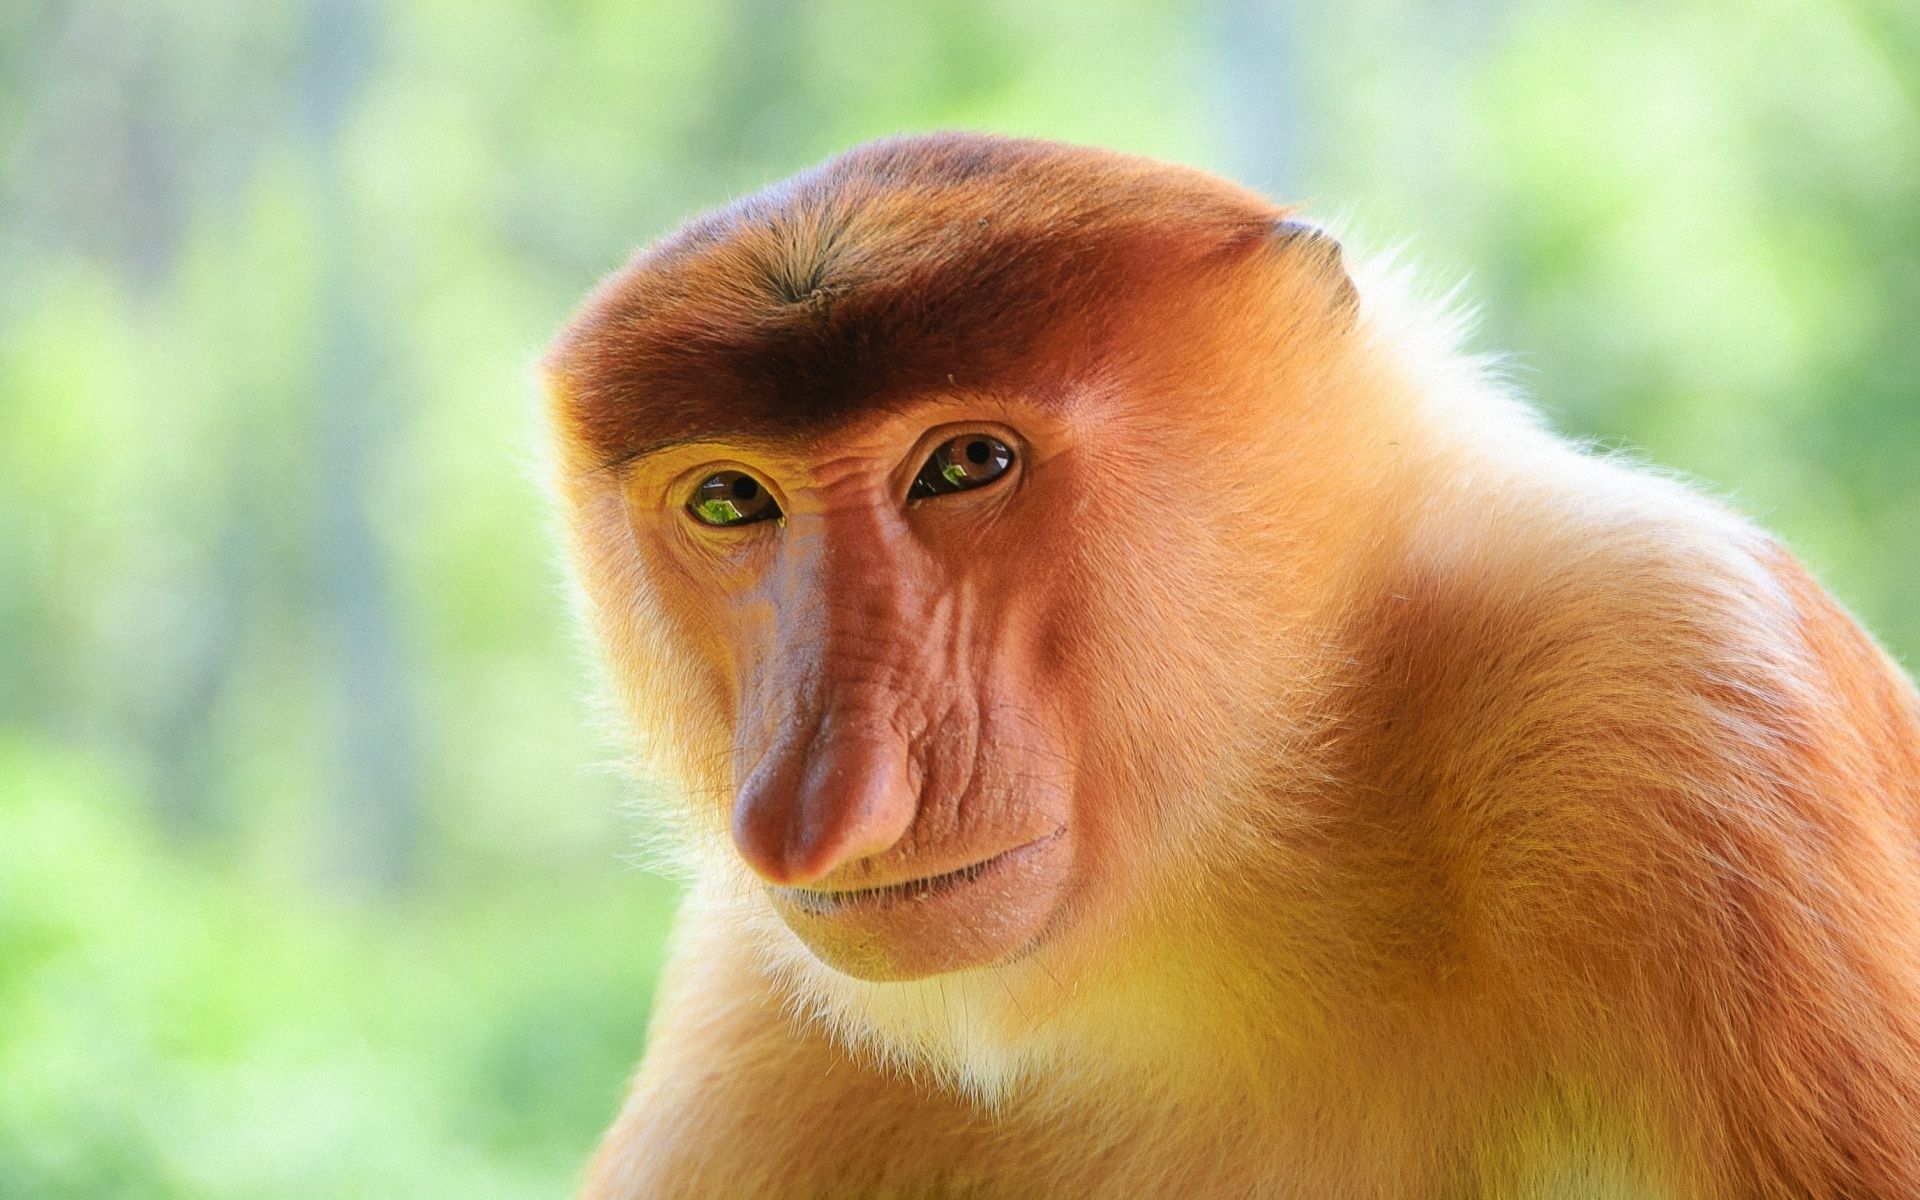 Proboscis Monkey wallpaper, Animal, HQ Proboscis Monkey picture